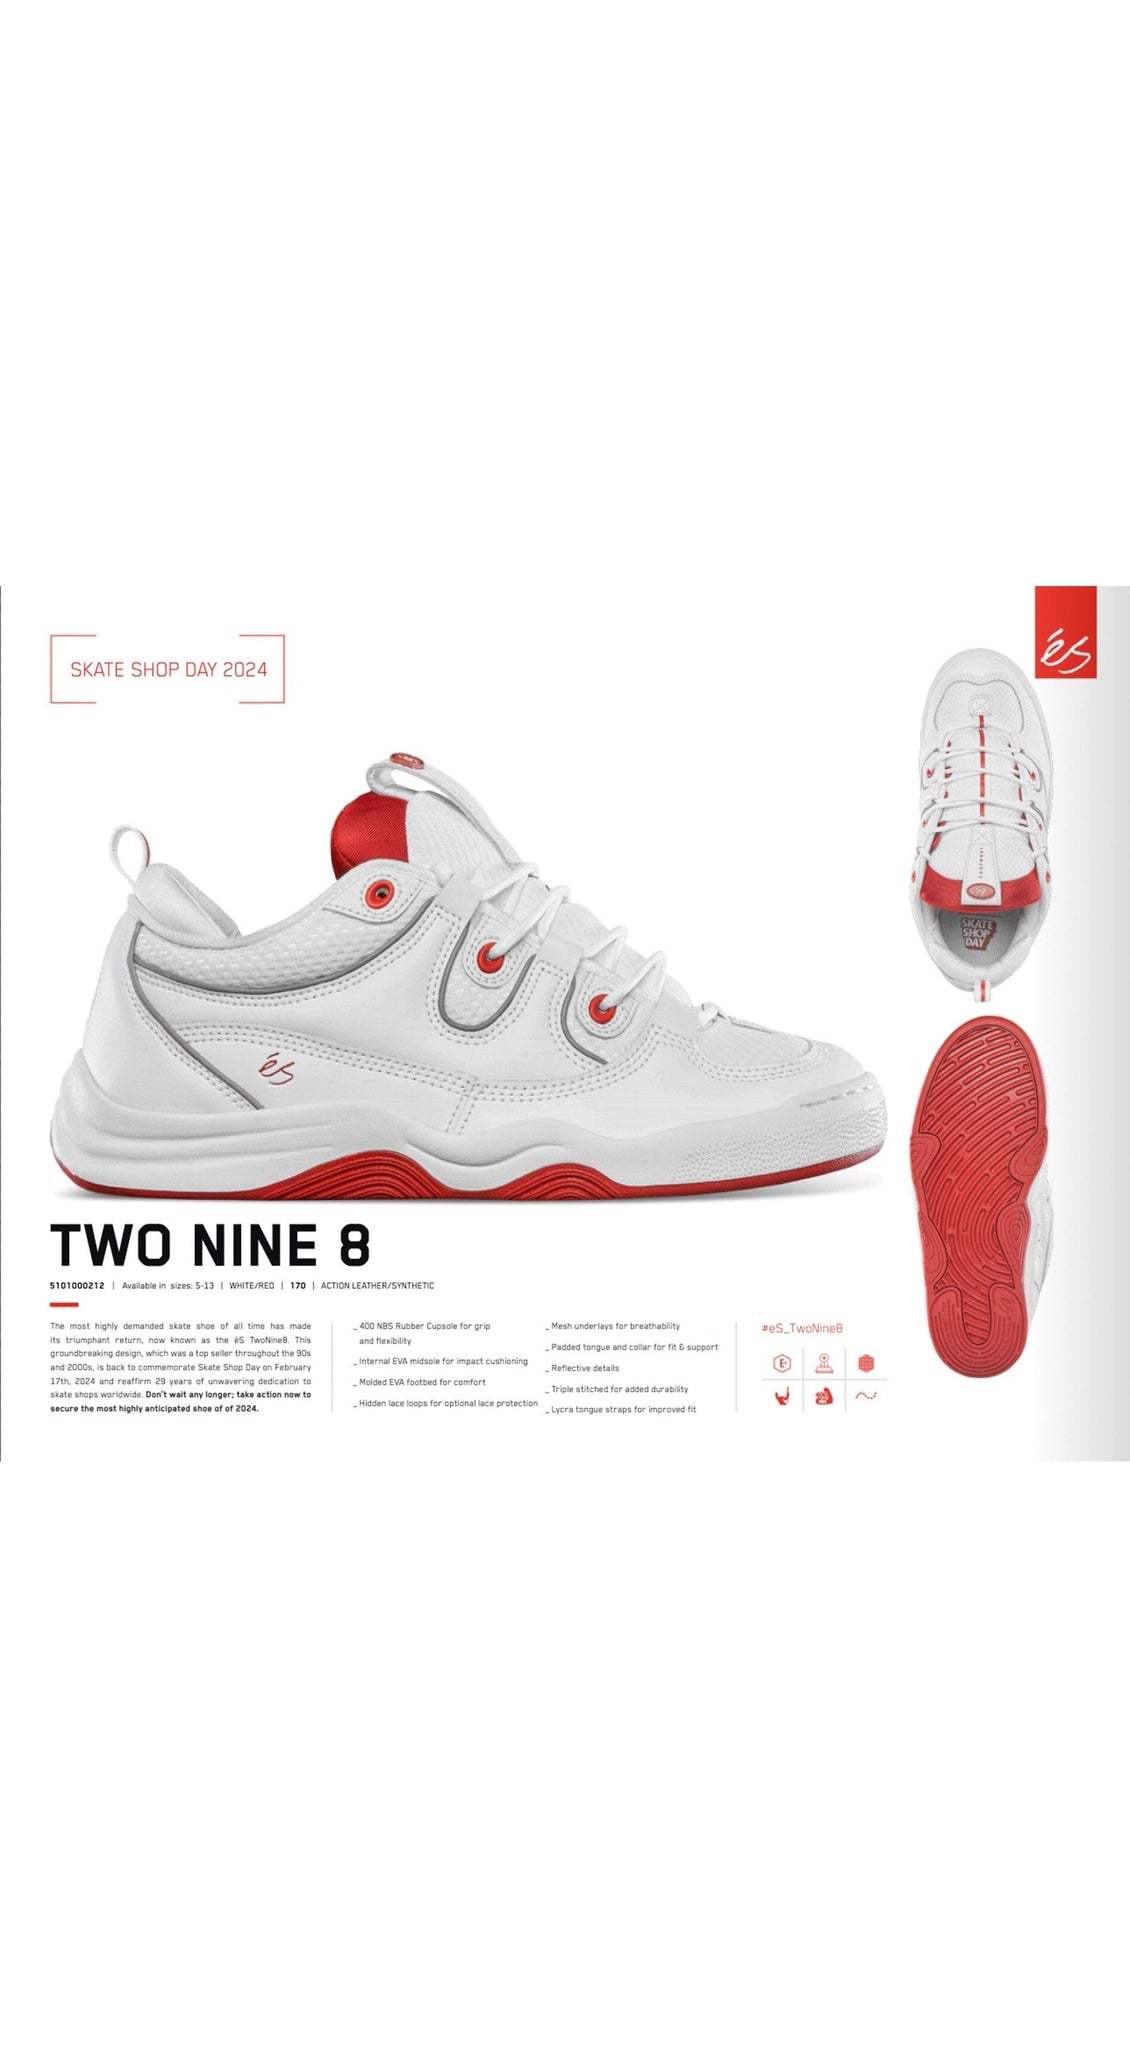 éS Two NINE 8 White/Red "Skate Shop Day" Skateboarding shoes -Zapatillas-Preorder Zapas eS Skateboarding 